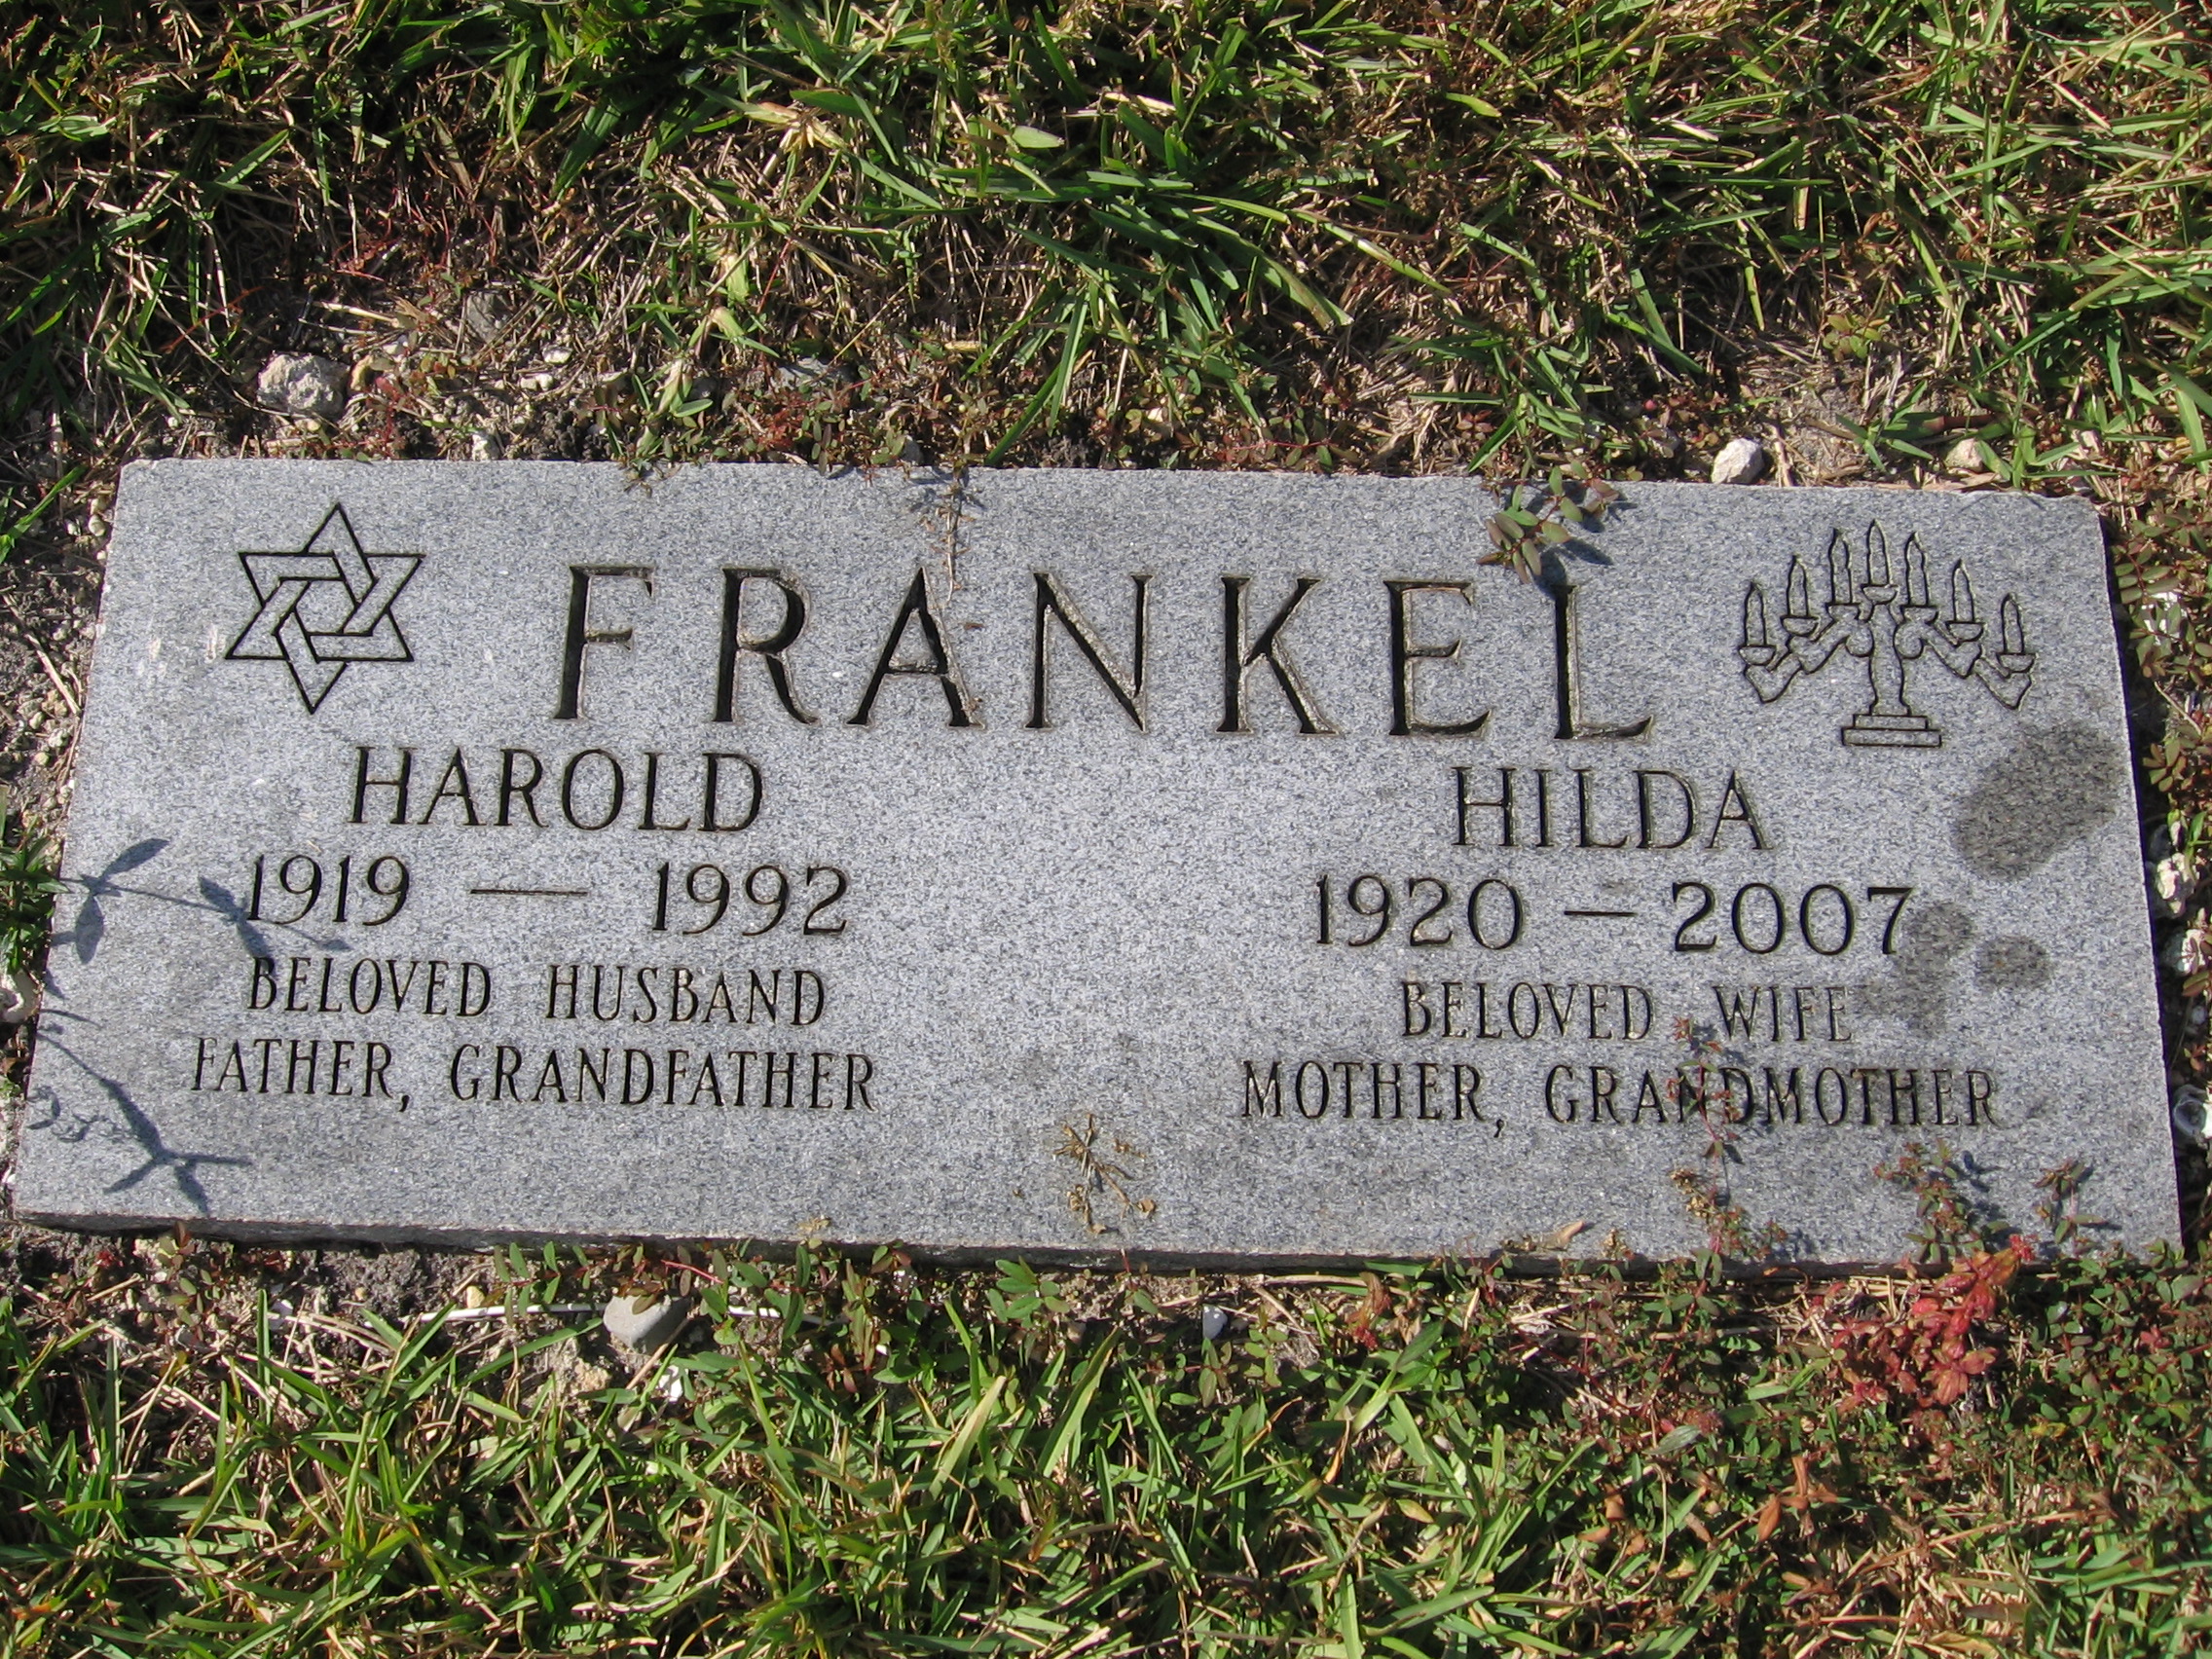 Harold Frankel